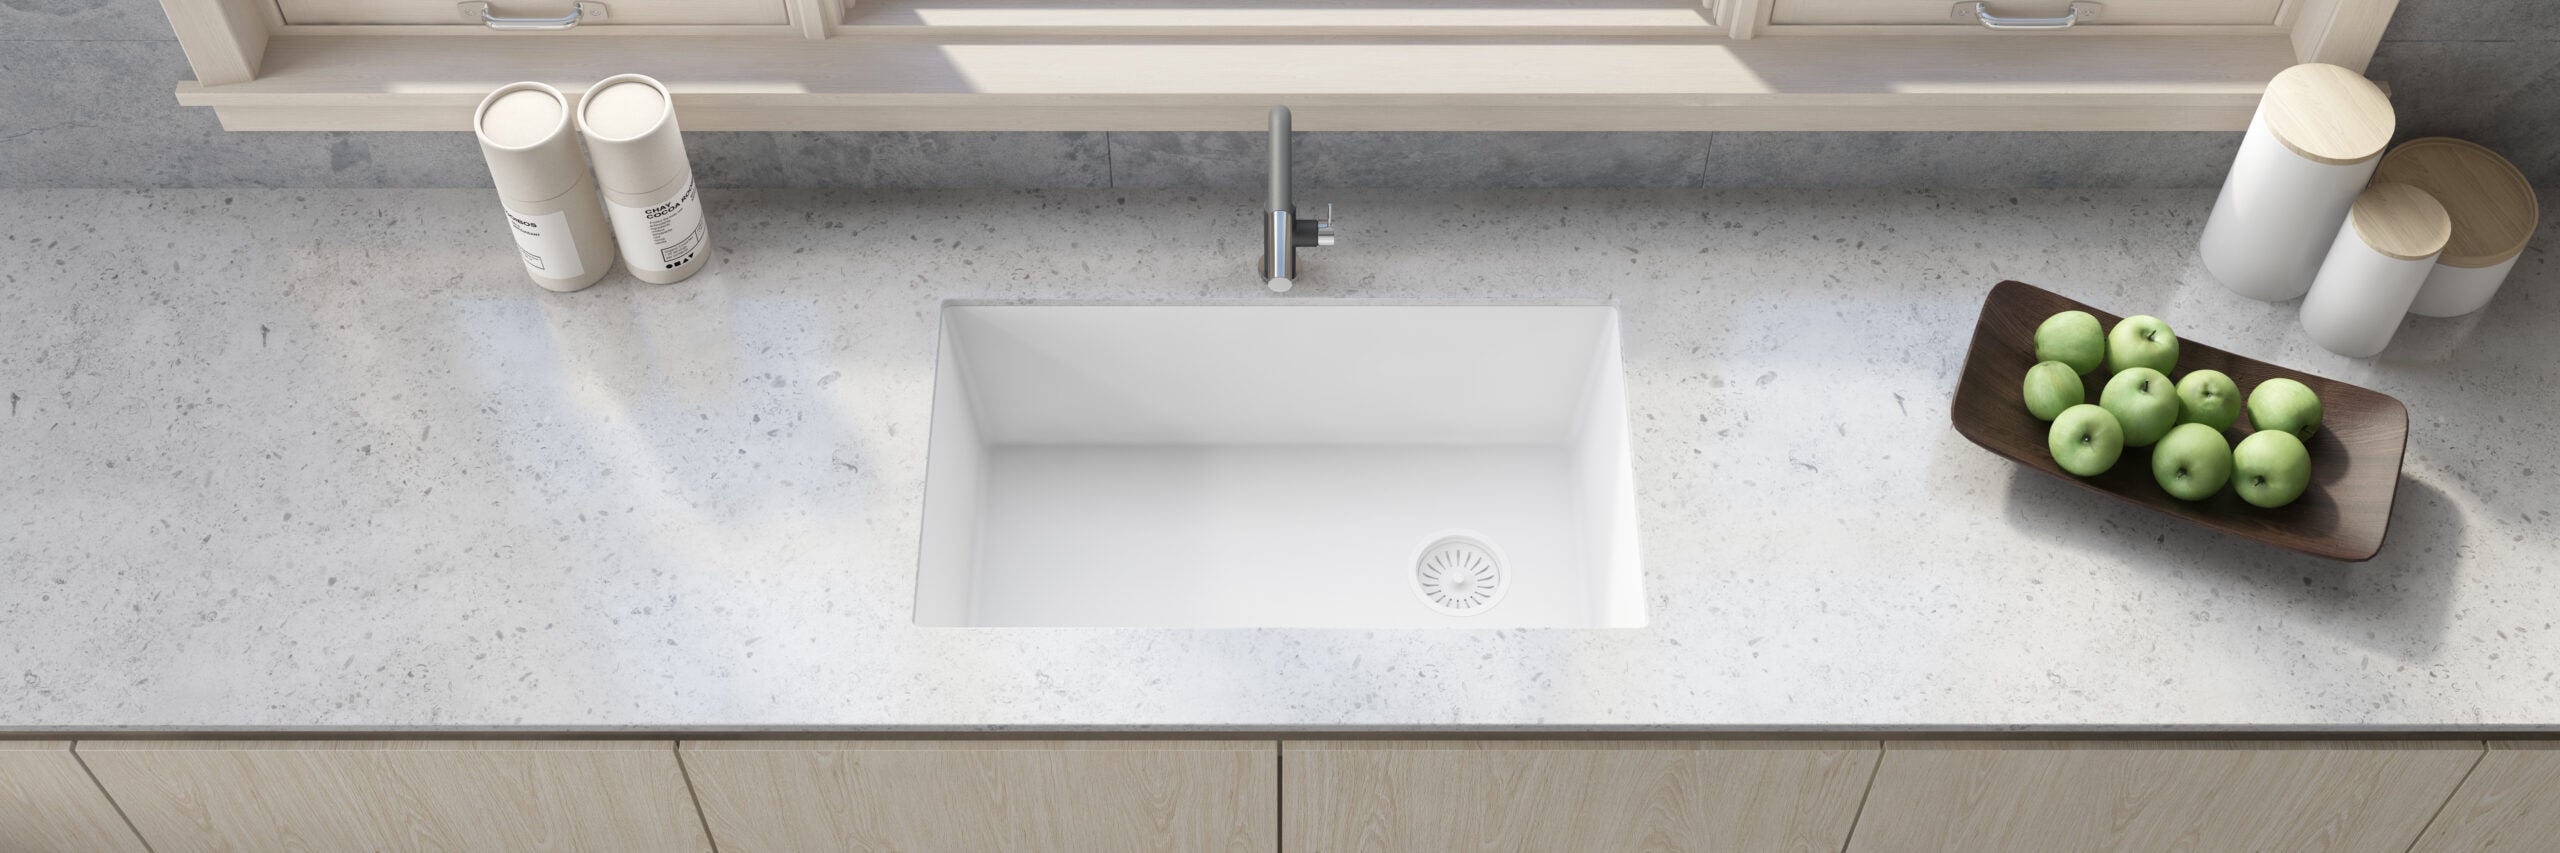 32 x 19 inch epiGranite Undermount Granite Composite Single Bowl Kitchen Sink – Arctic White